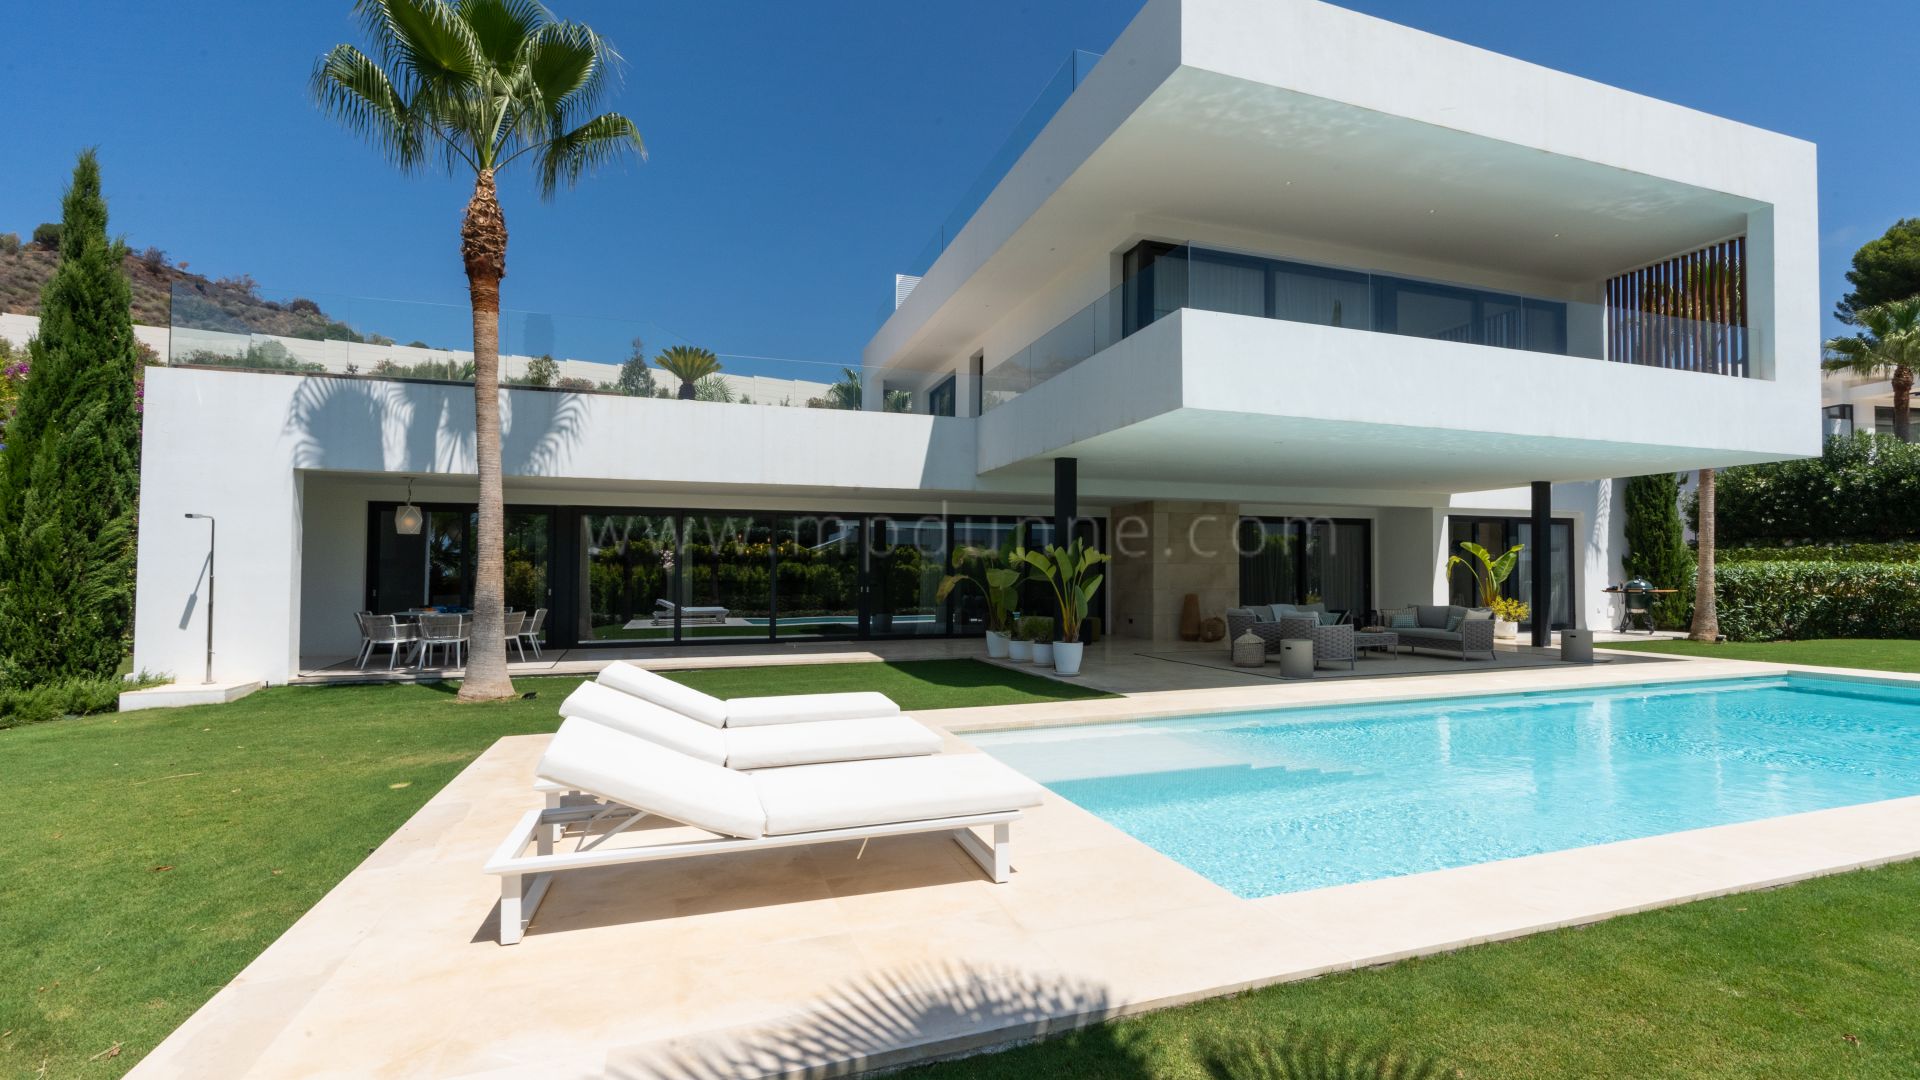 Modern Private Villa Los Olivos in Gated Community, Marbella